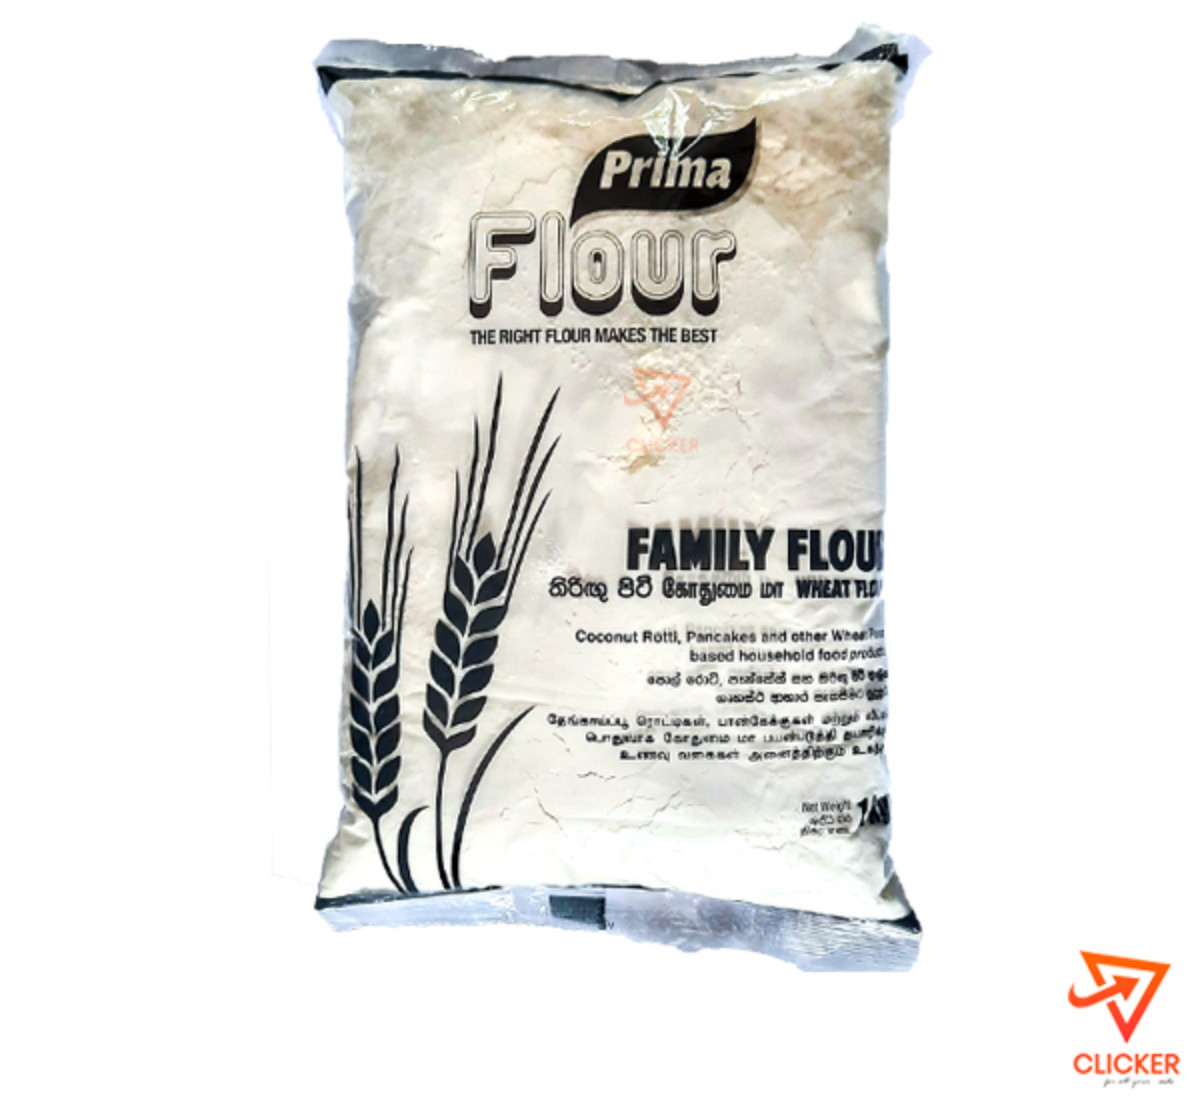 Clicker product 1kg PRIMA wheat flour 1174